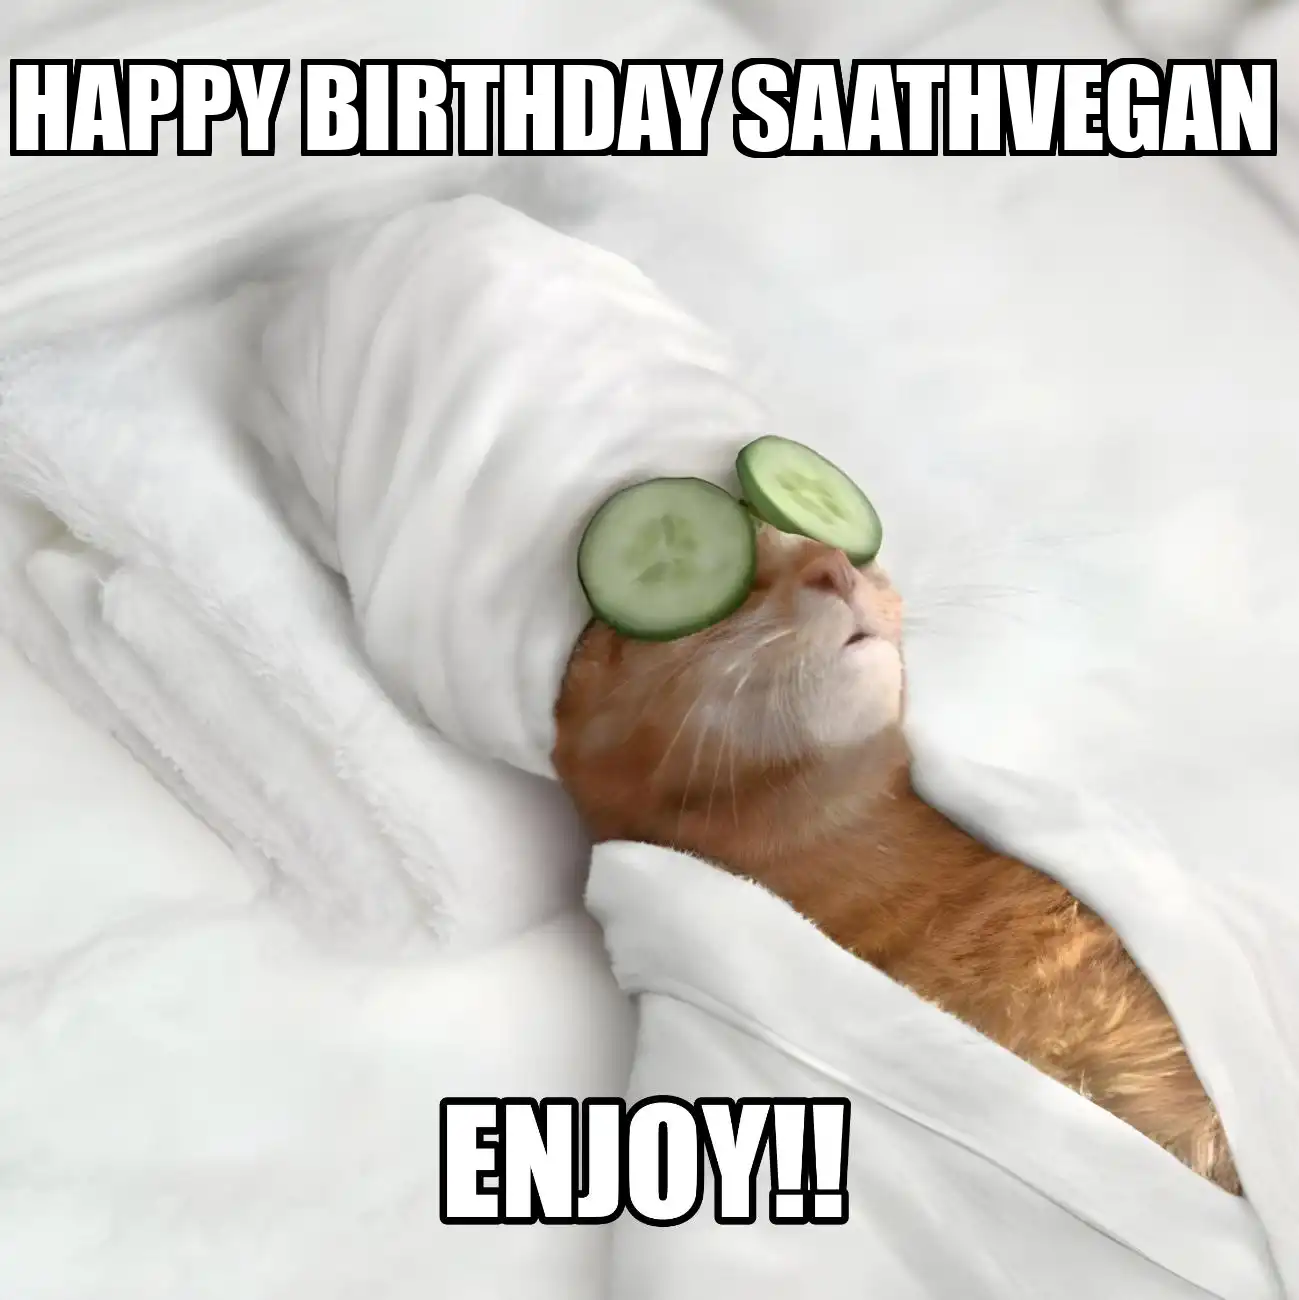 Happy Birthday Saathvegan Enjoy Cat Meme